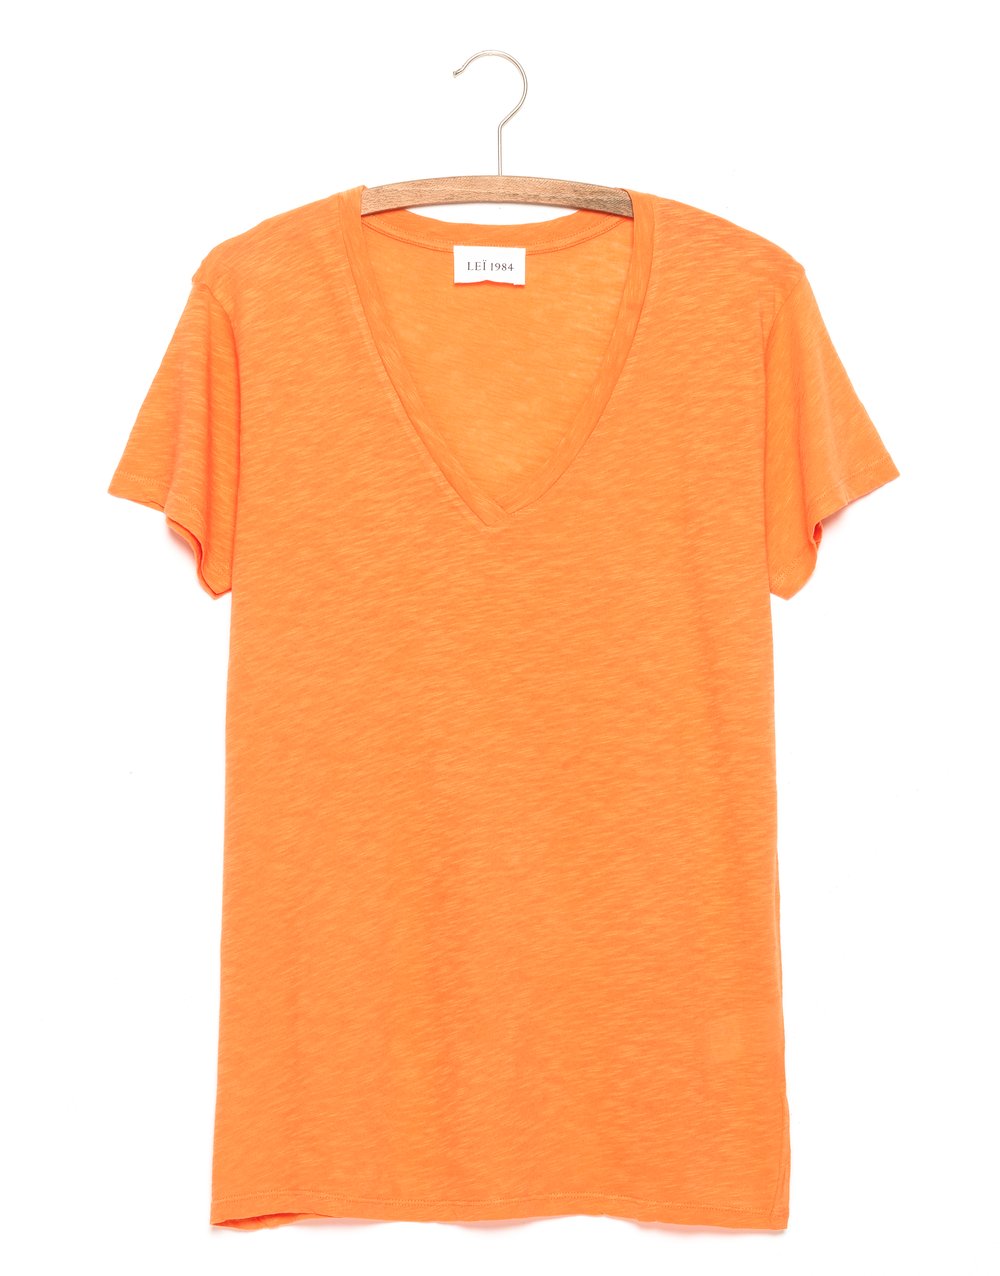 Image of Tee-shirt Col V flamé CERISE BIS Orange 45€ -50%